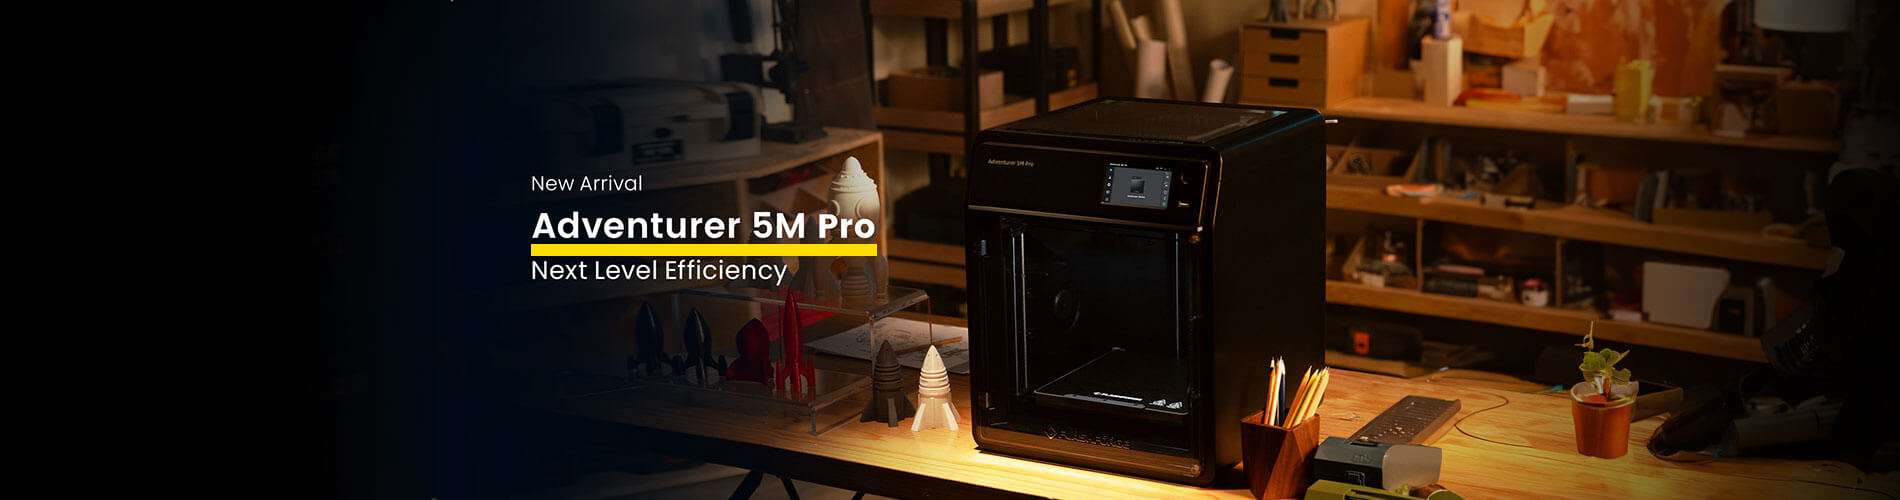 Flashforge Adventurer 5M Pro 3D Printer New Arrival